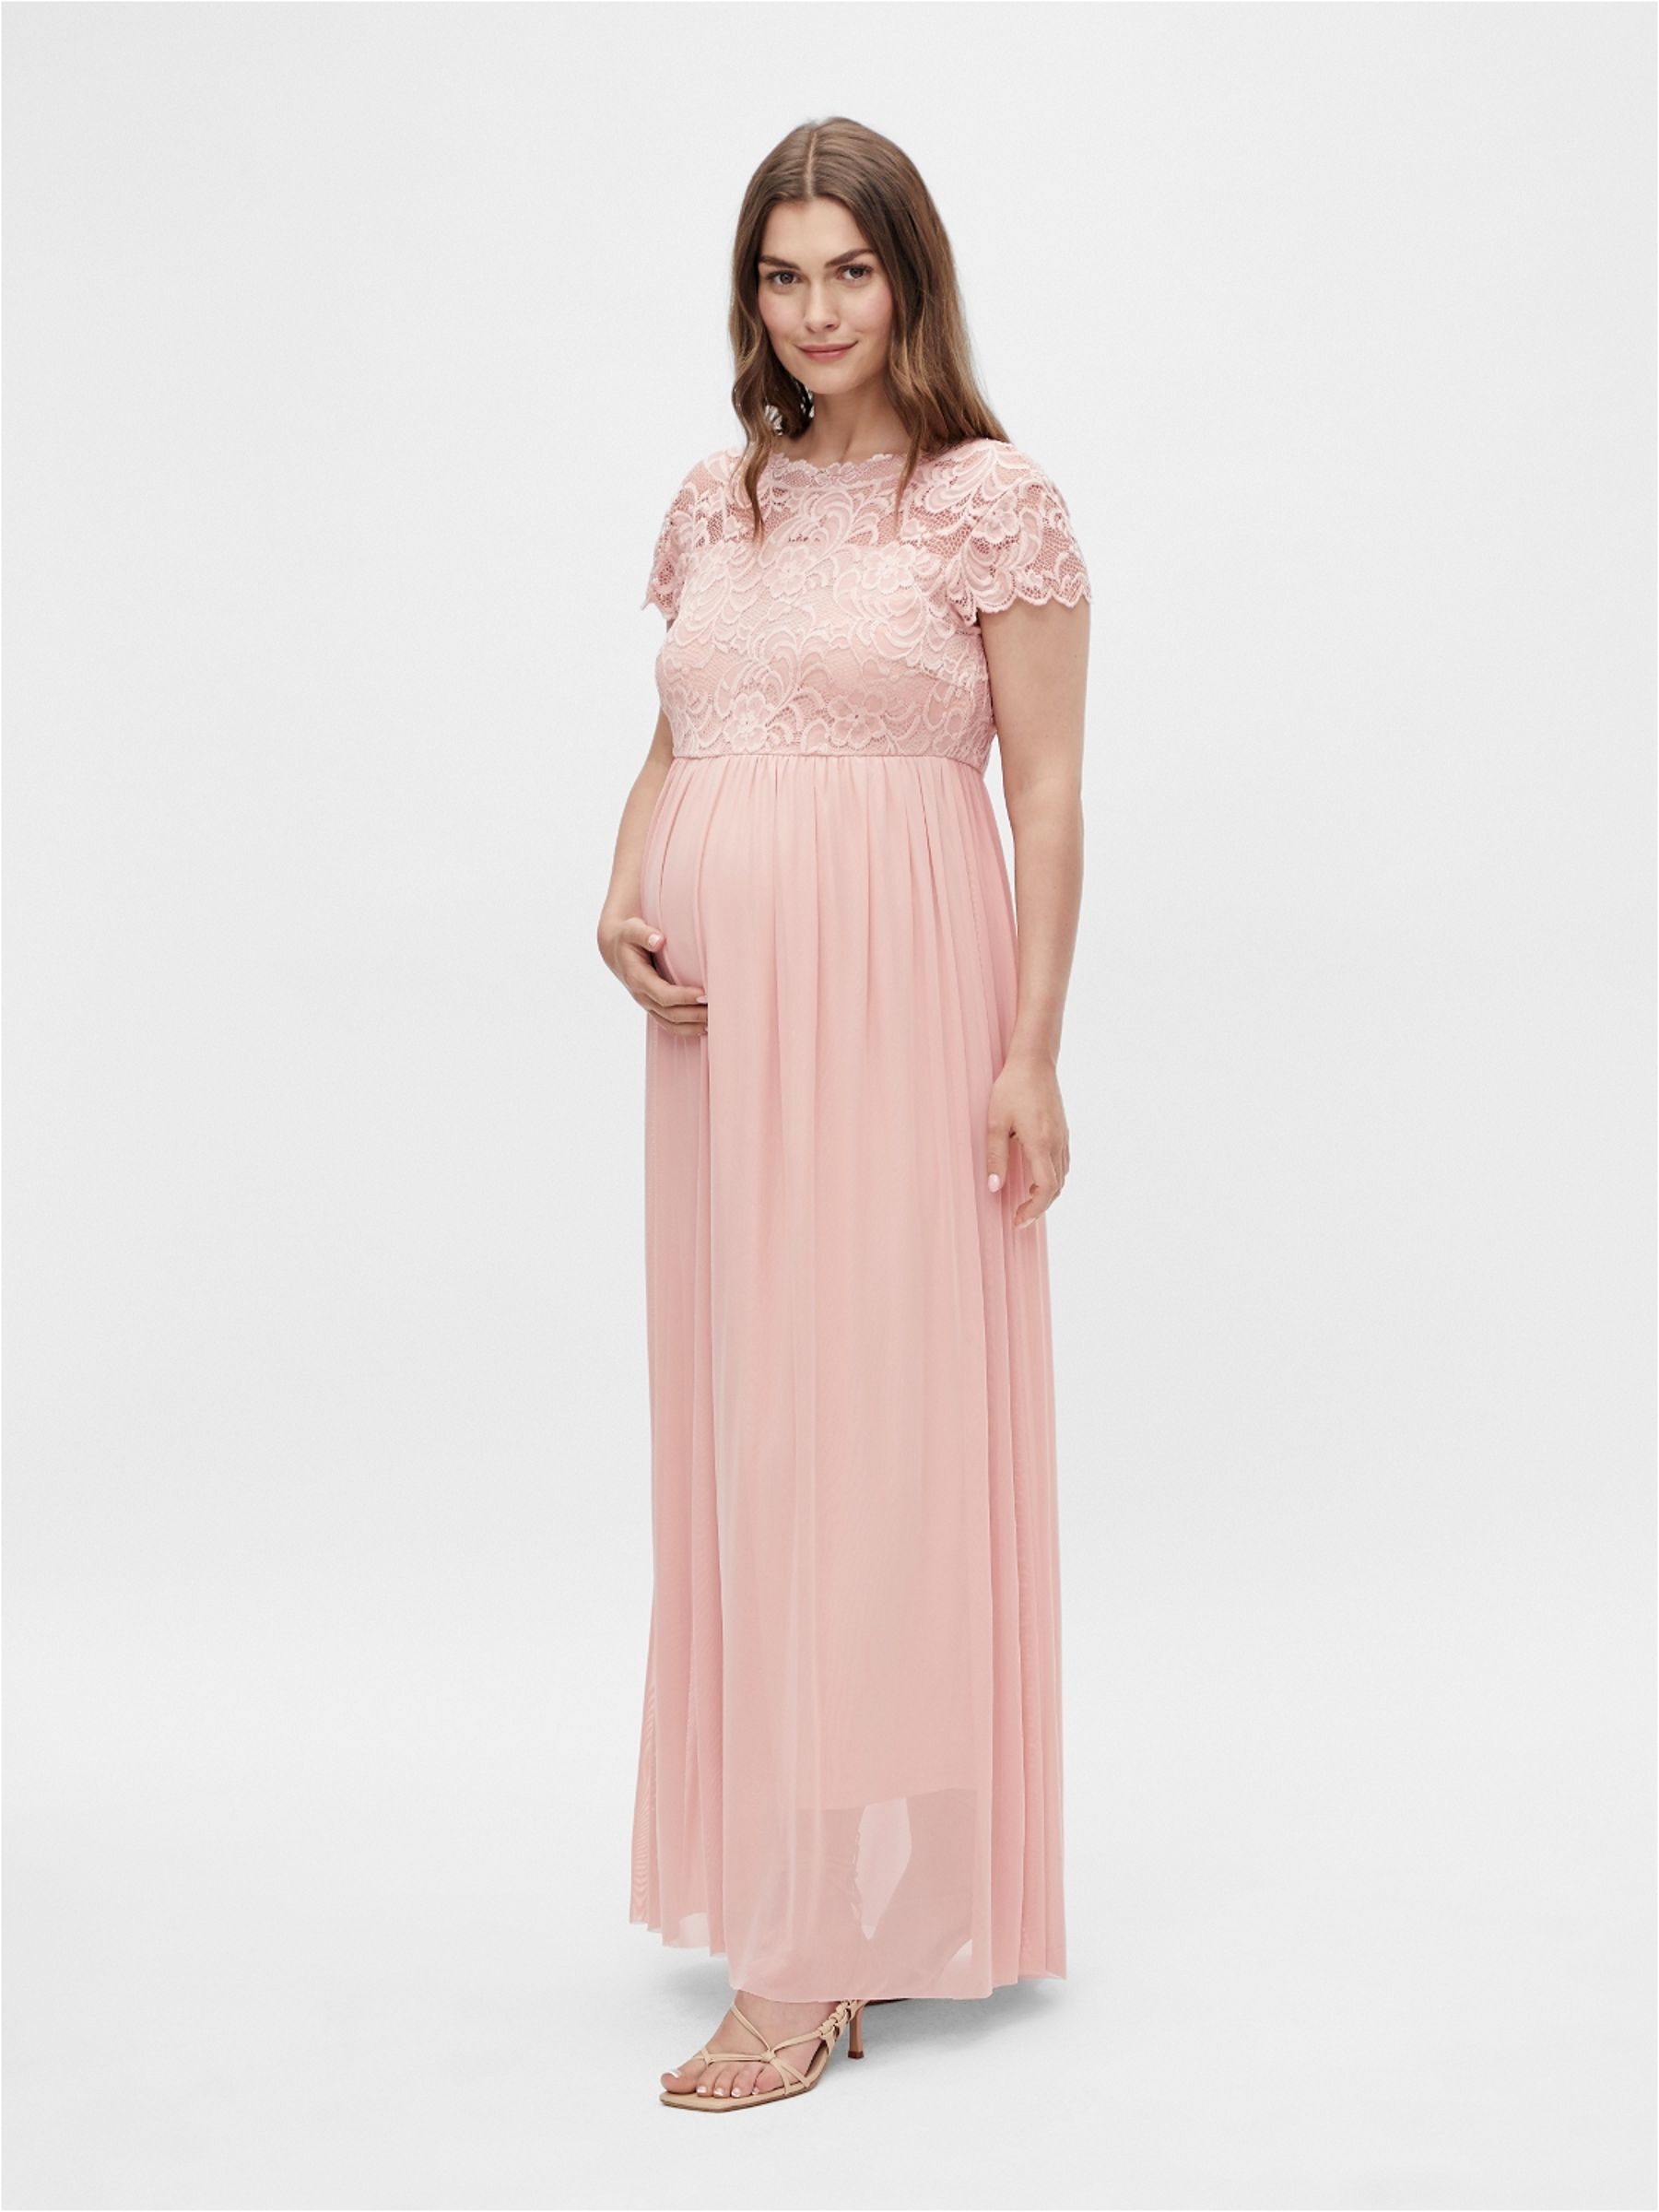 Libby Lace Cap Sleeve Maternity Dress – HELLO MIZ